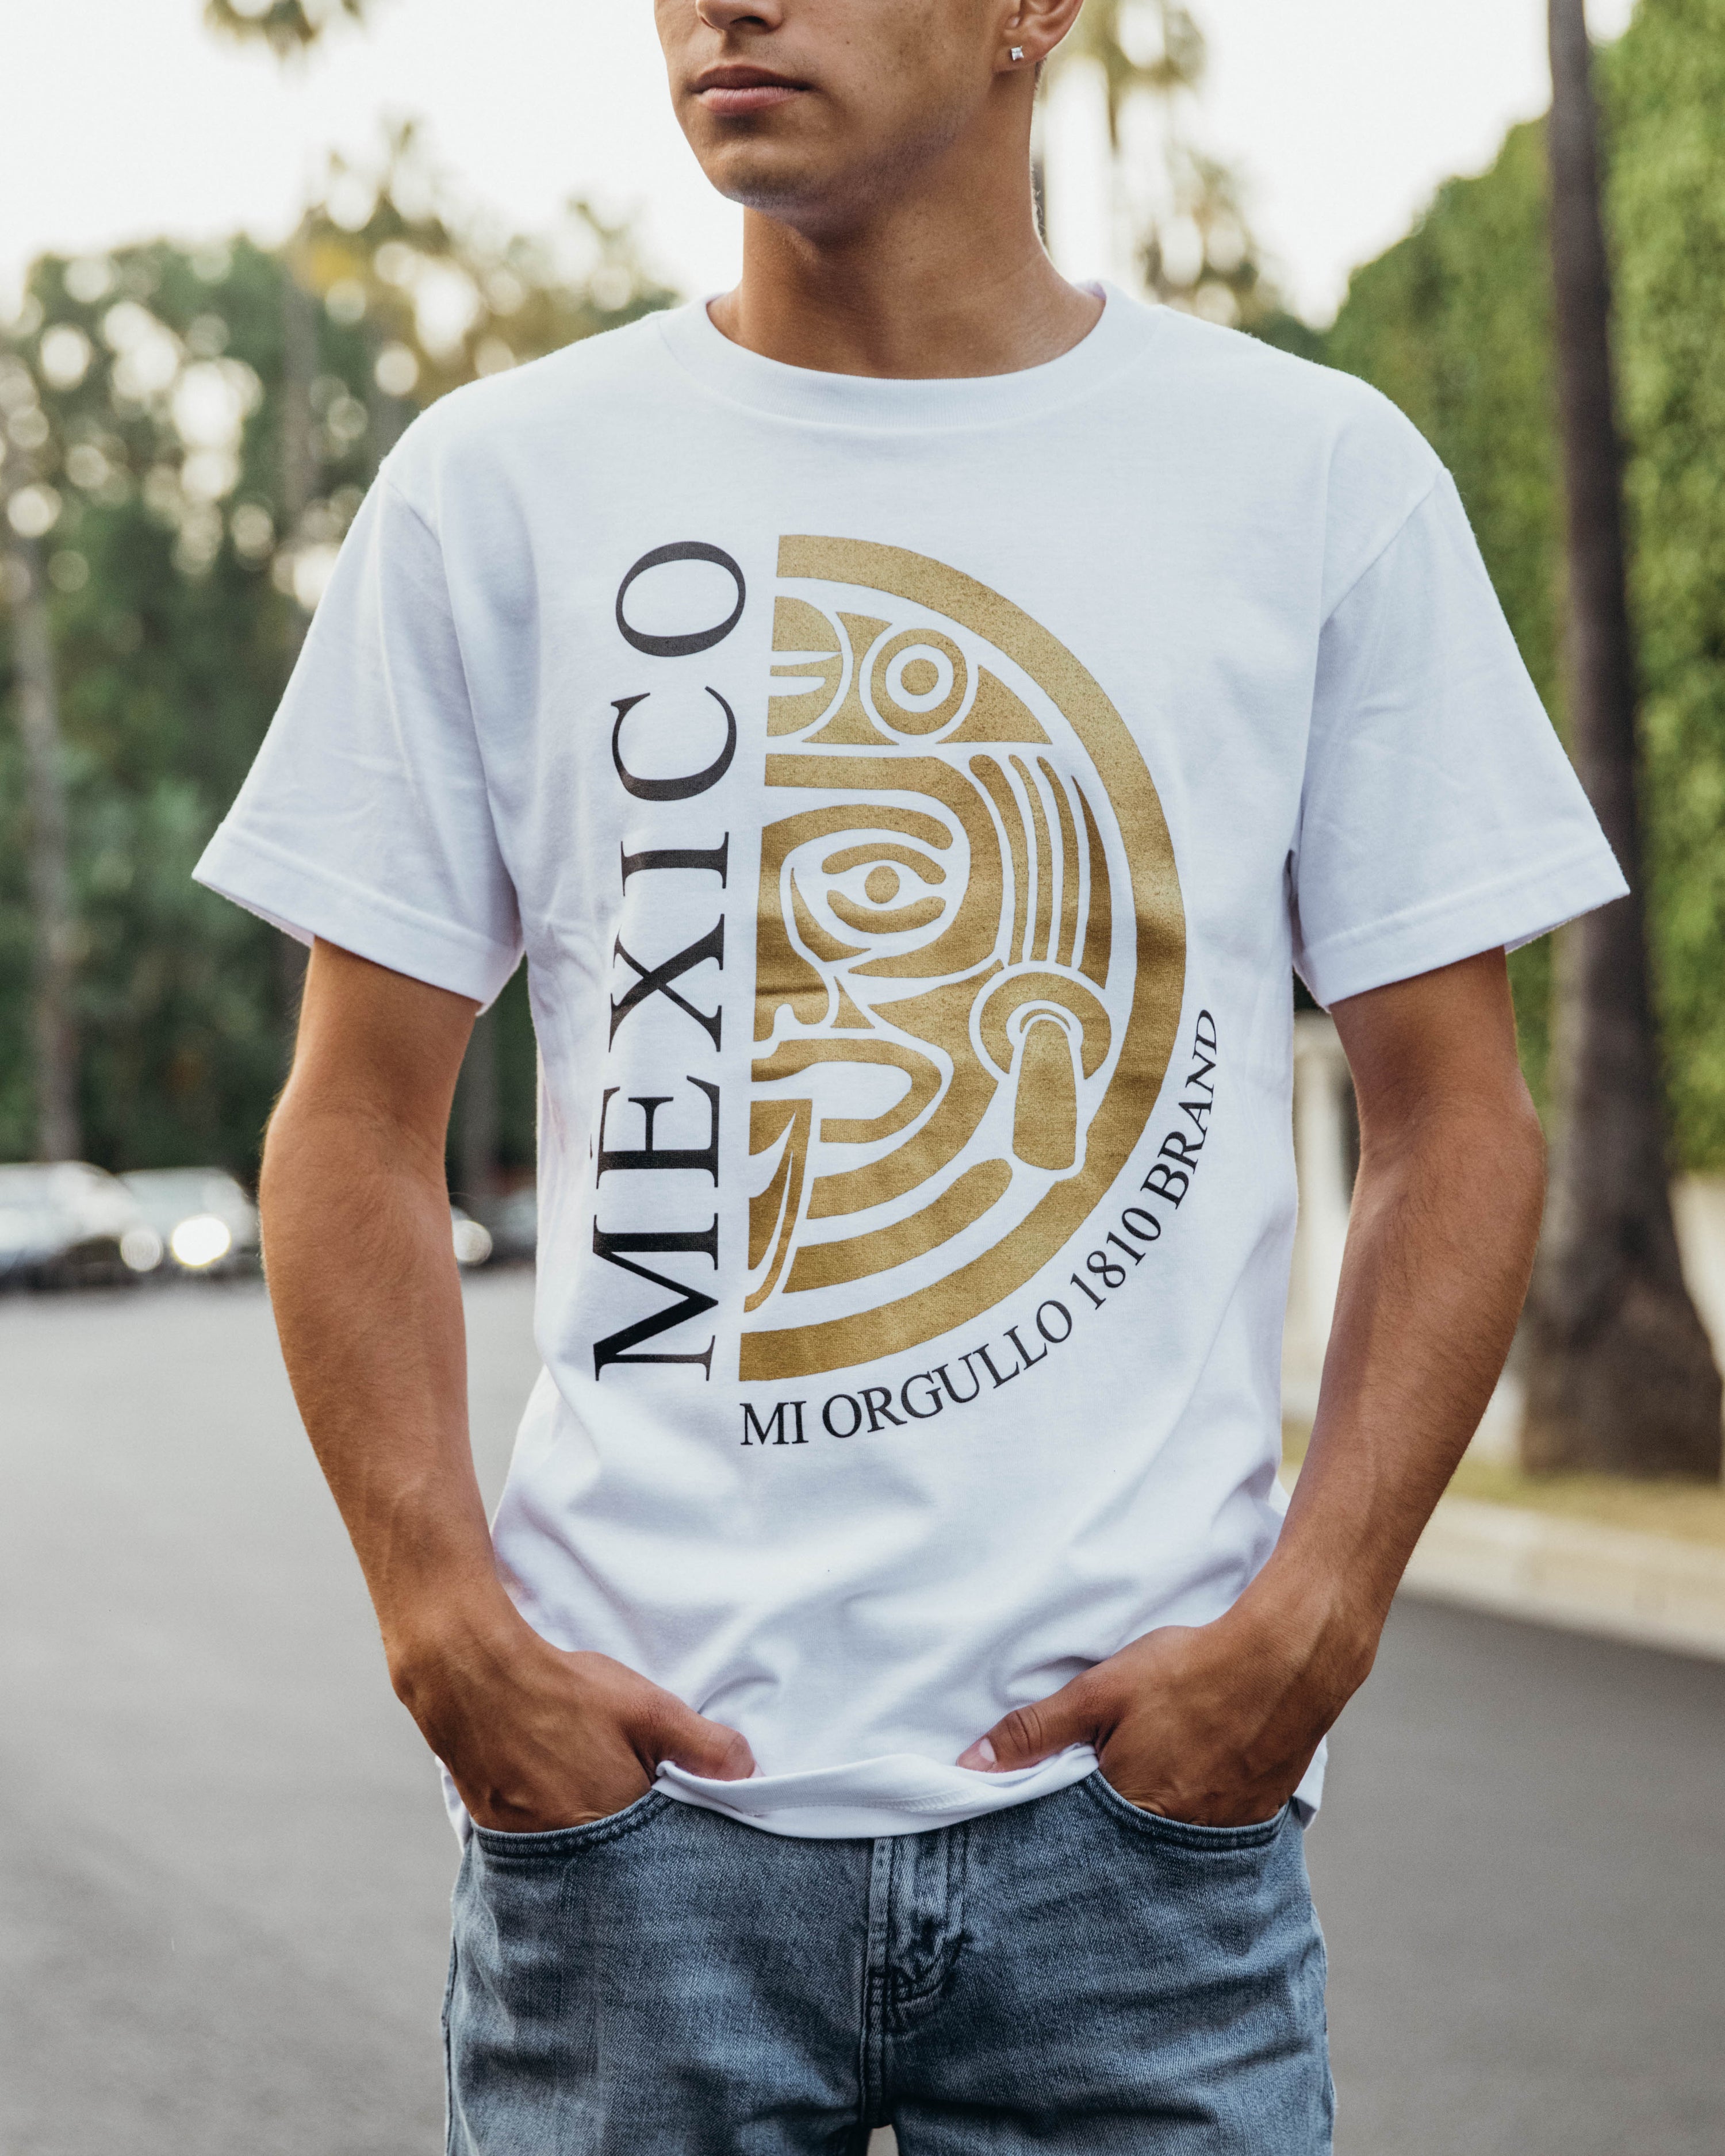 Mi ORGULLO1810 Brand Los Angeles Black T-Shirt XL